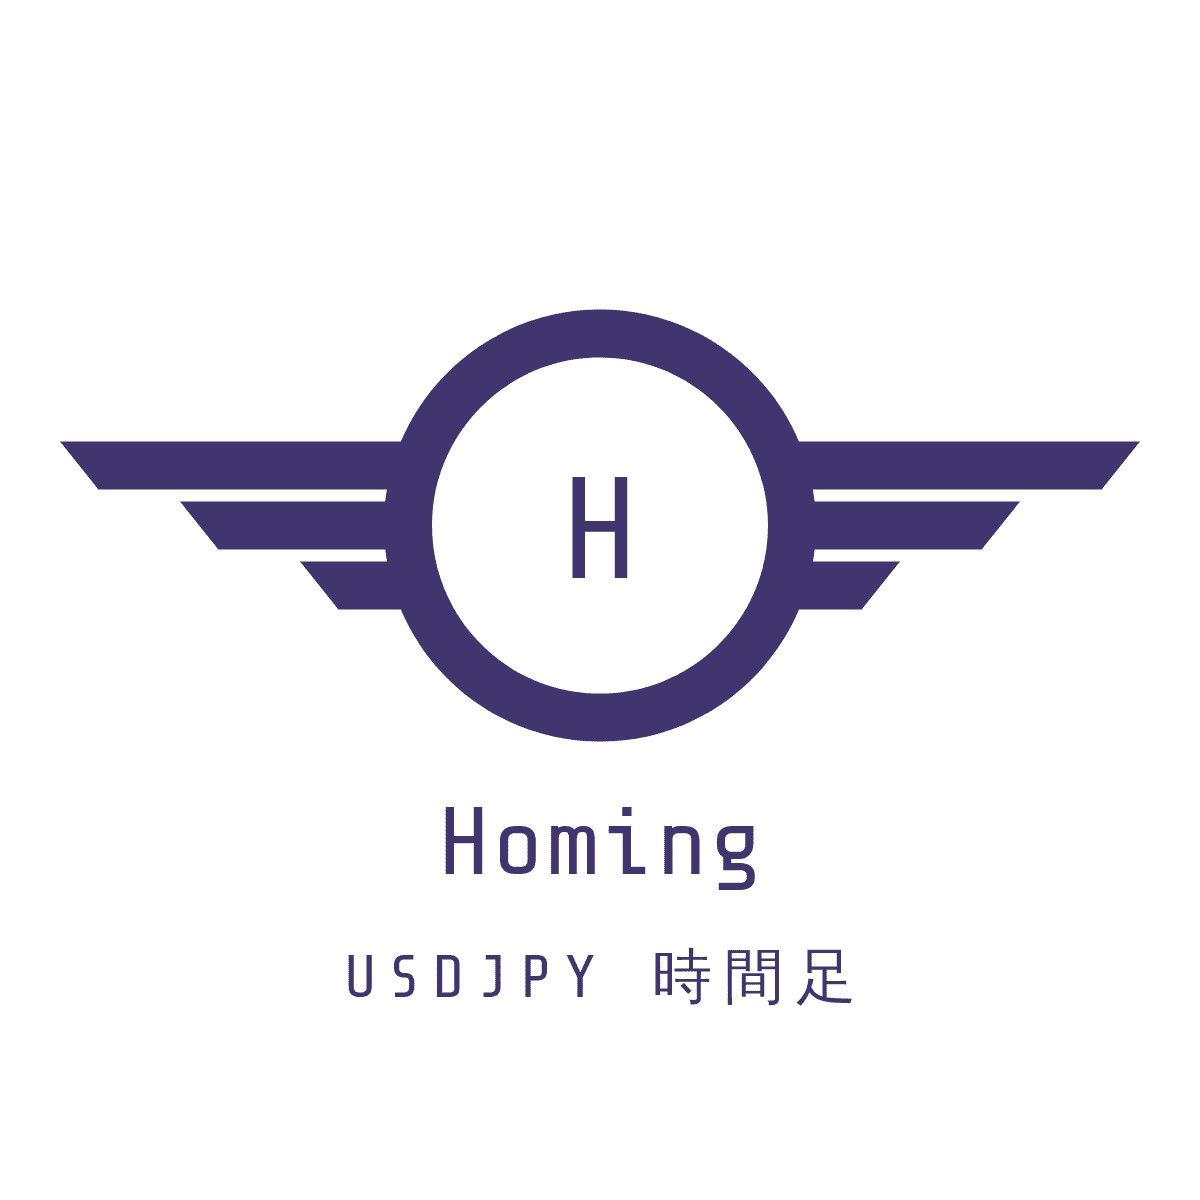 Homing USDJPY 時間足 Auto Trading